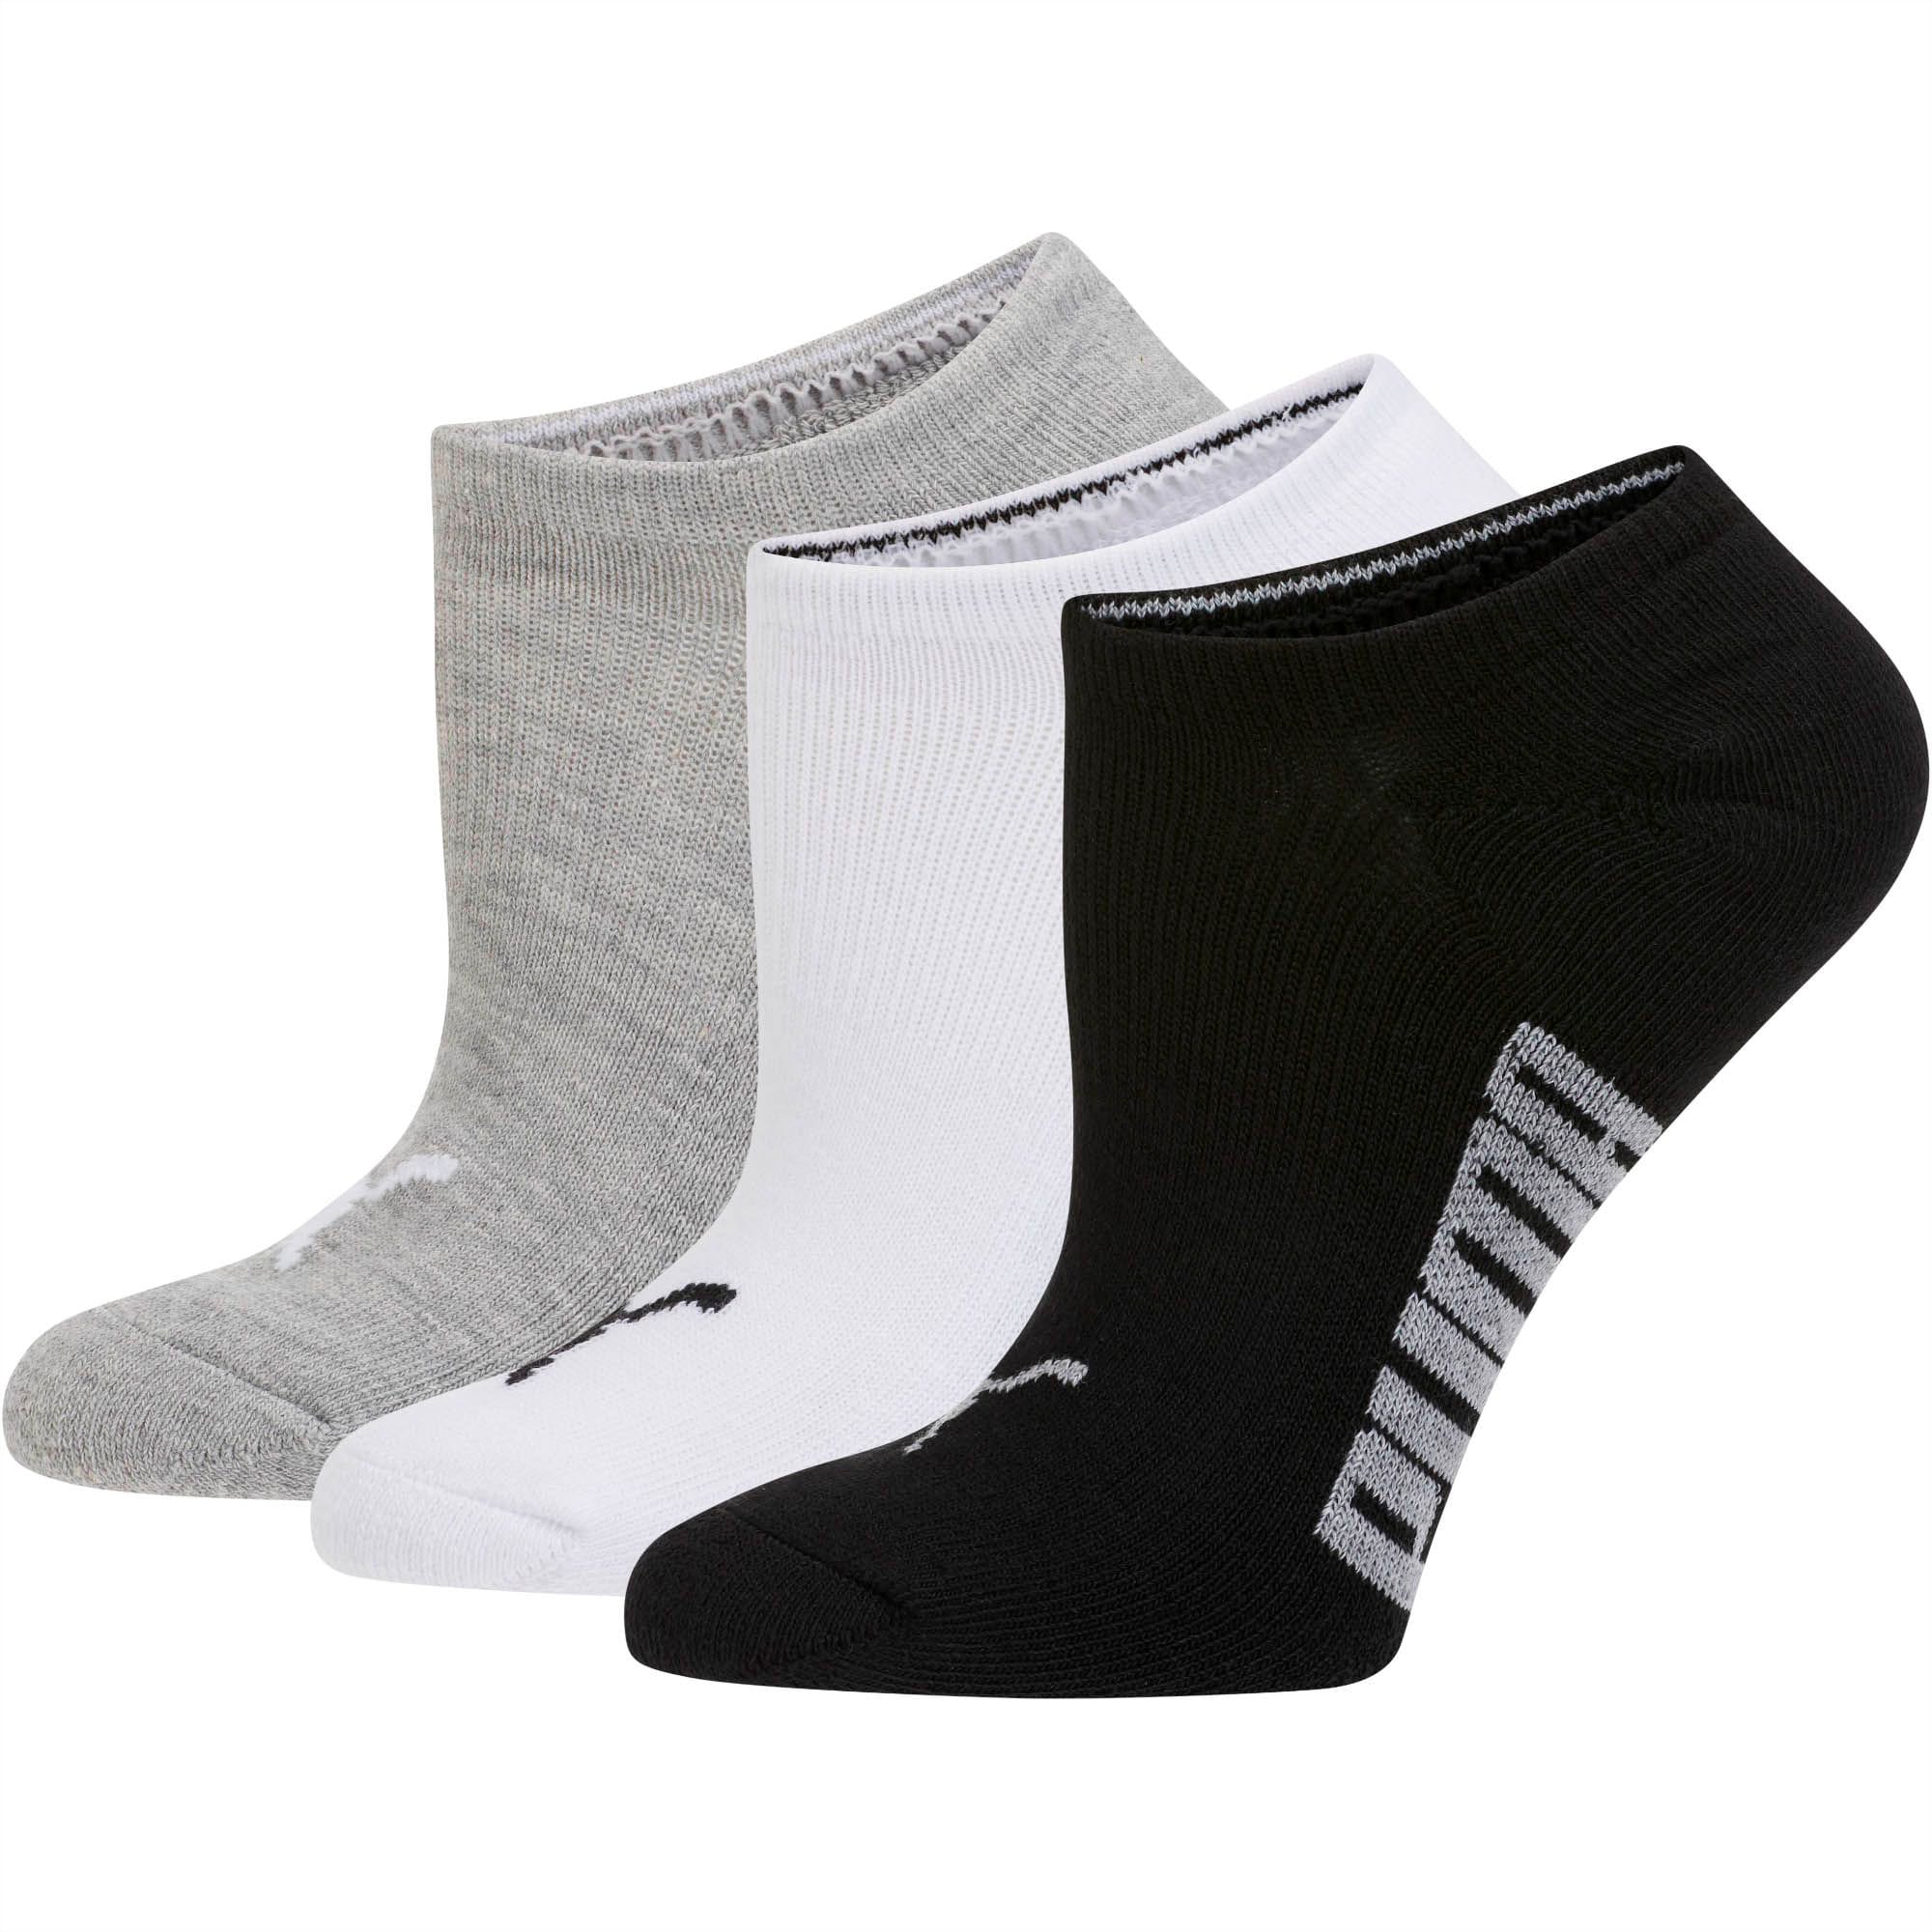 black puma socks womens